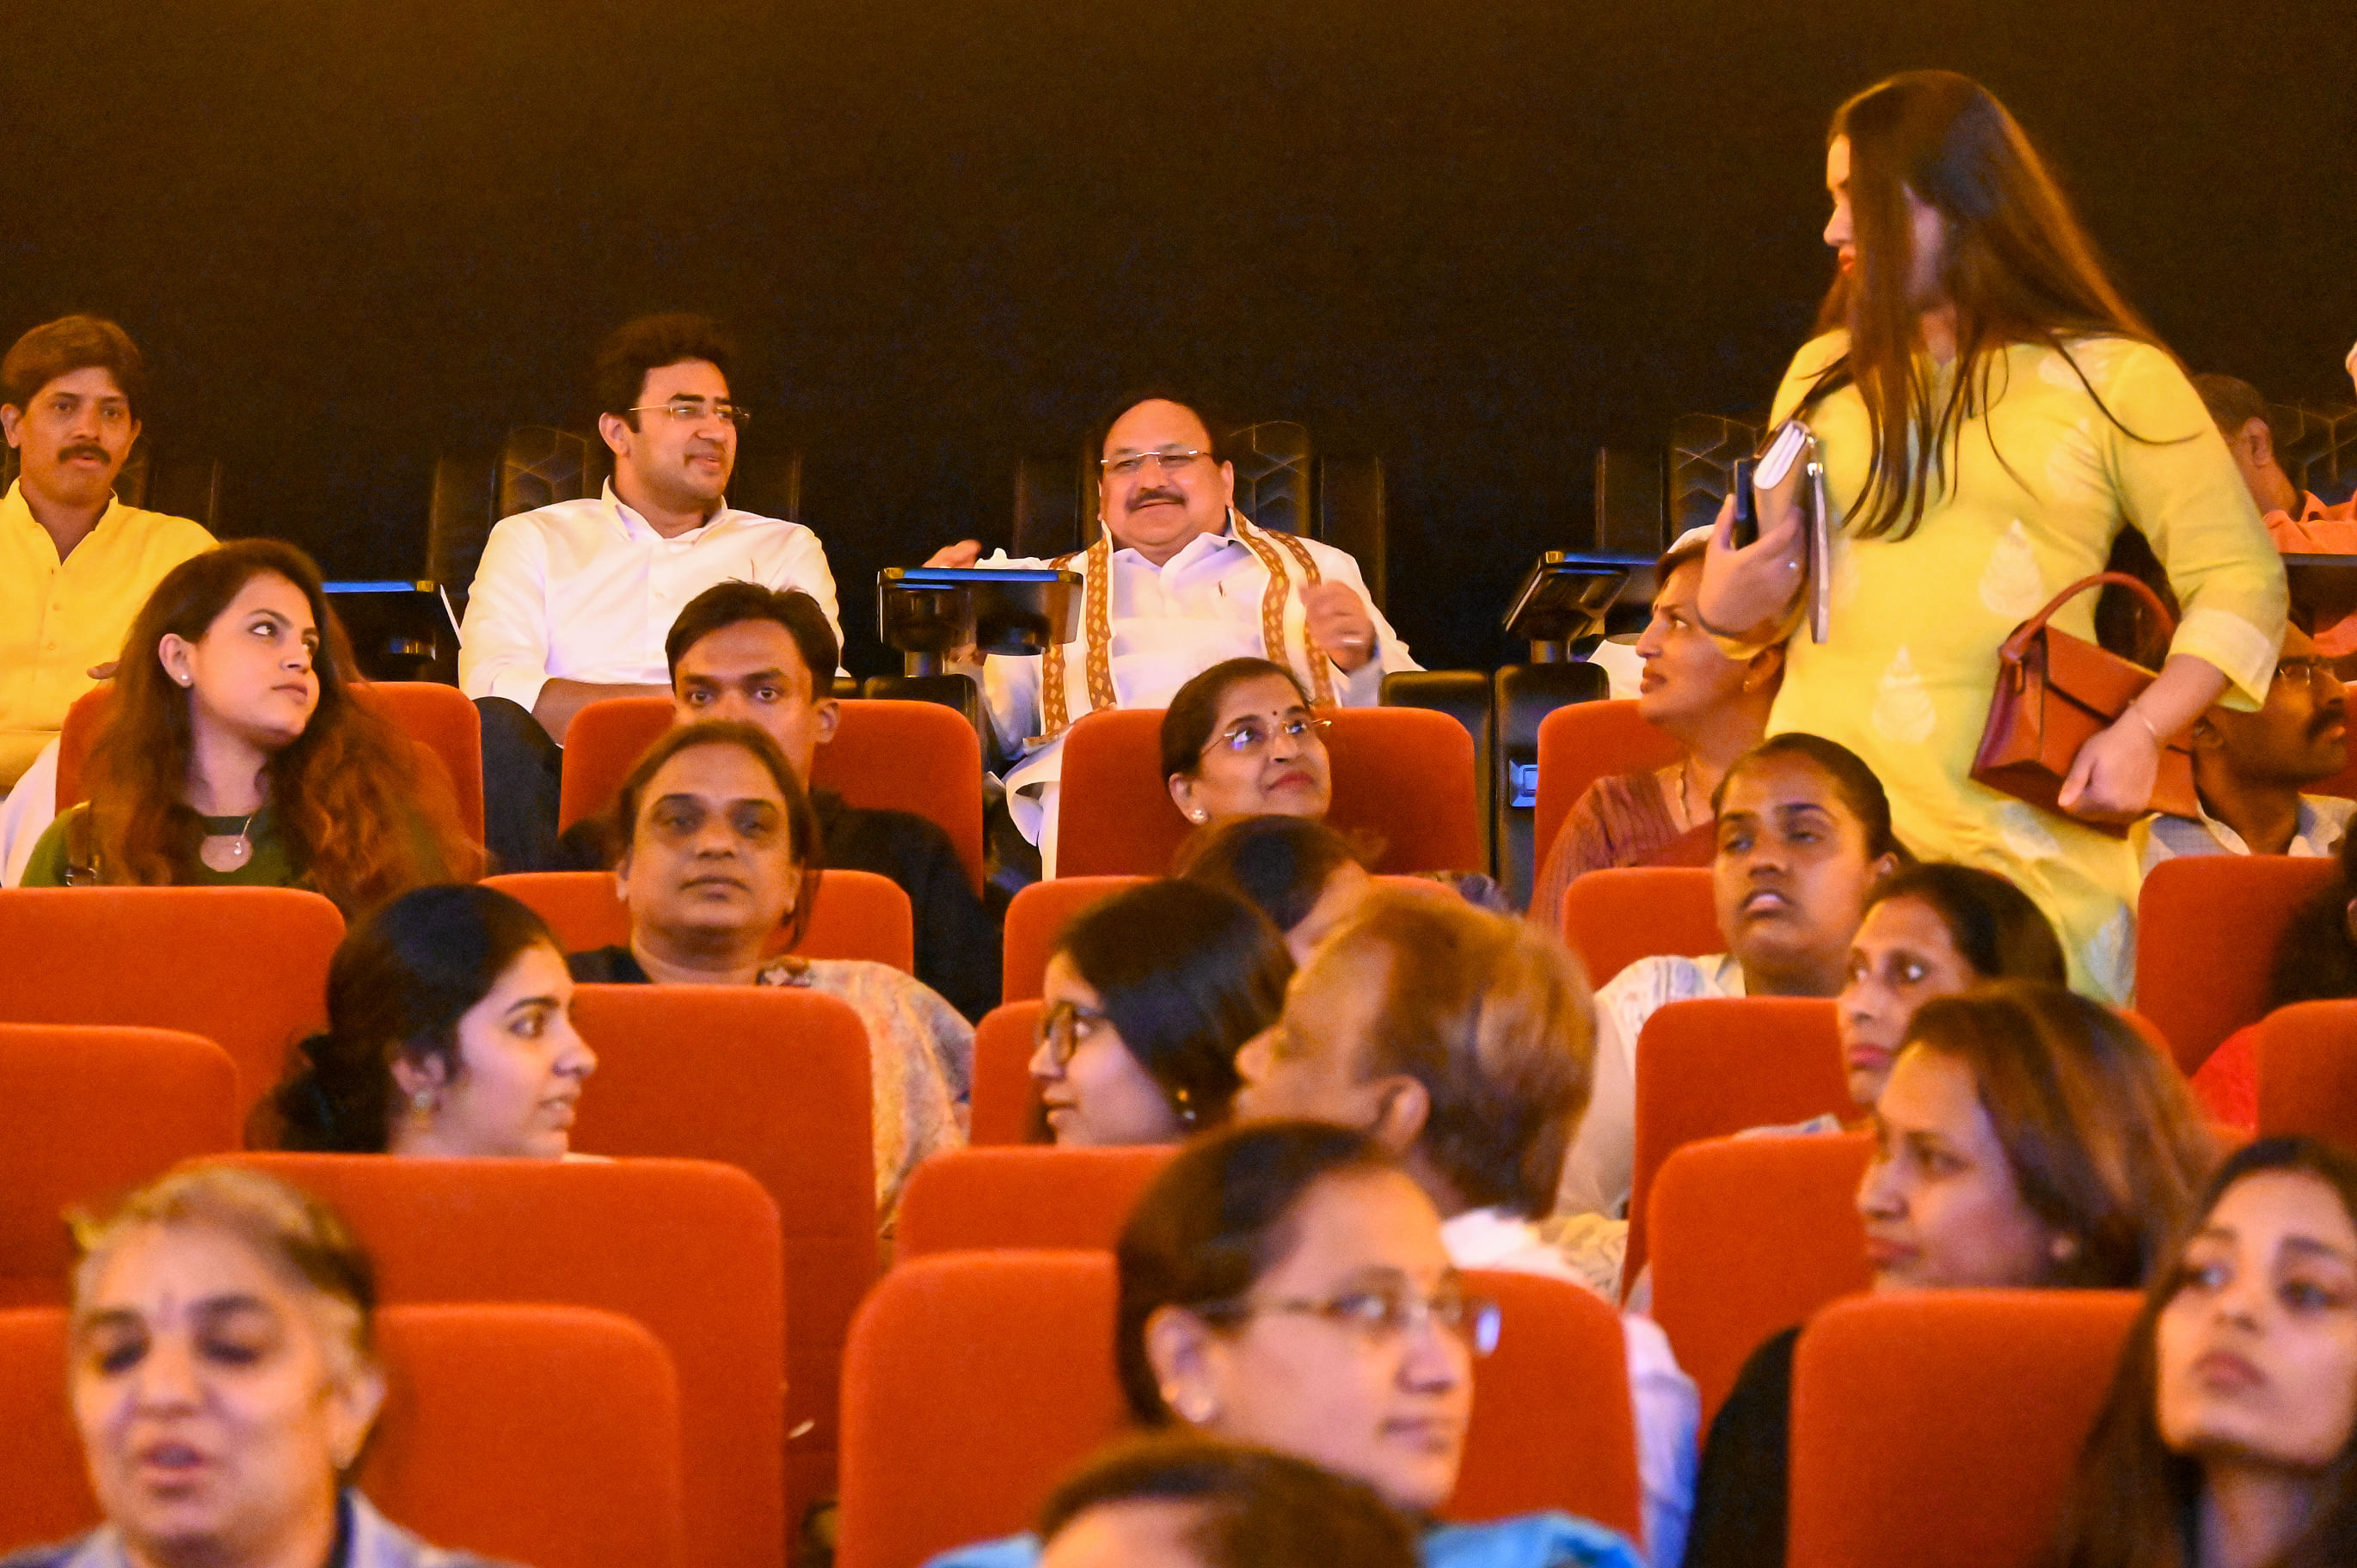 BJP national president J P Nadda and Bangalore South Lok Sabha member Tejasvi Surya watch the movie "The Kerala Story" at the Inox theater, Garuda Mall, Bengaluru on Sunday. DH Photo/ B H Shivakumar